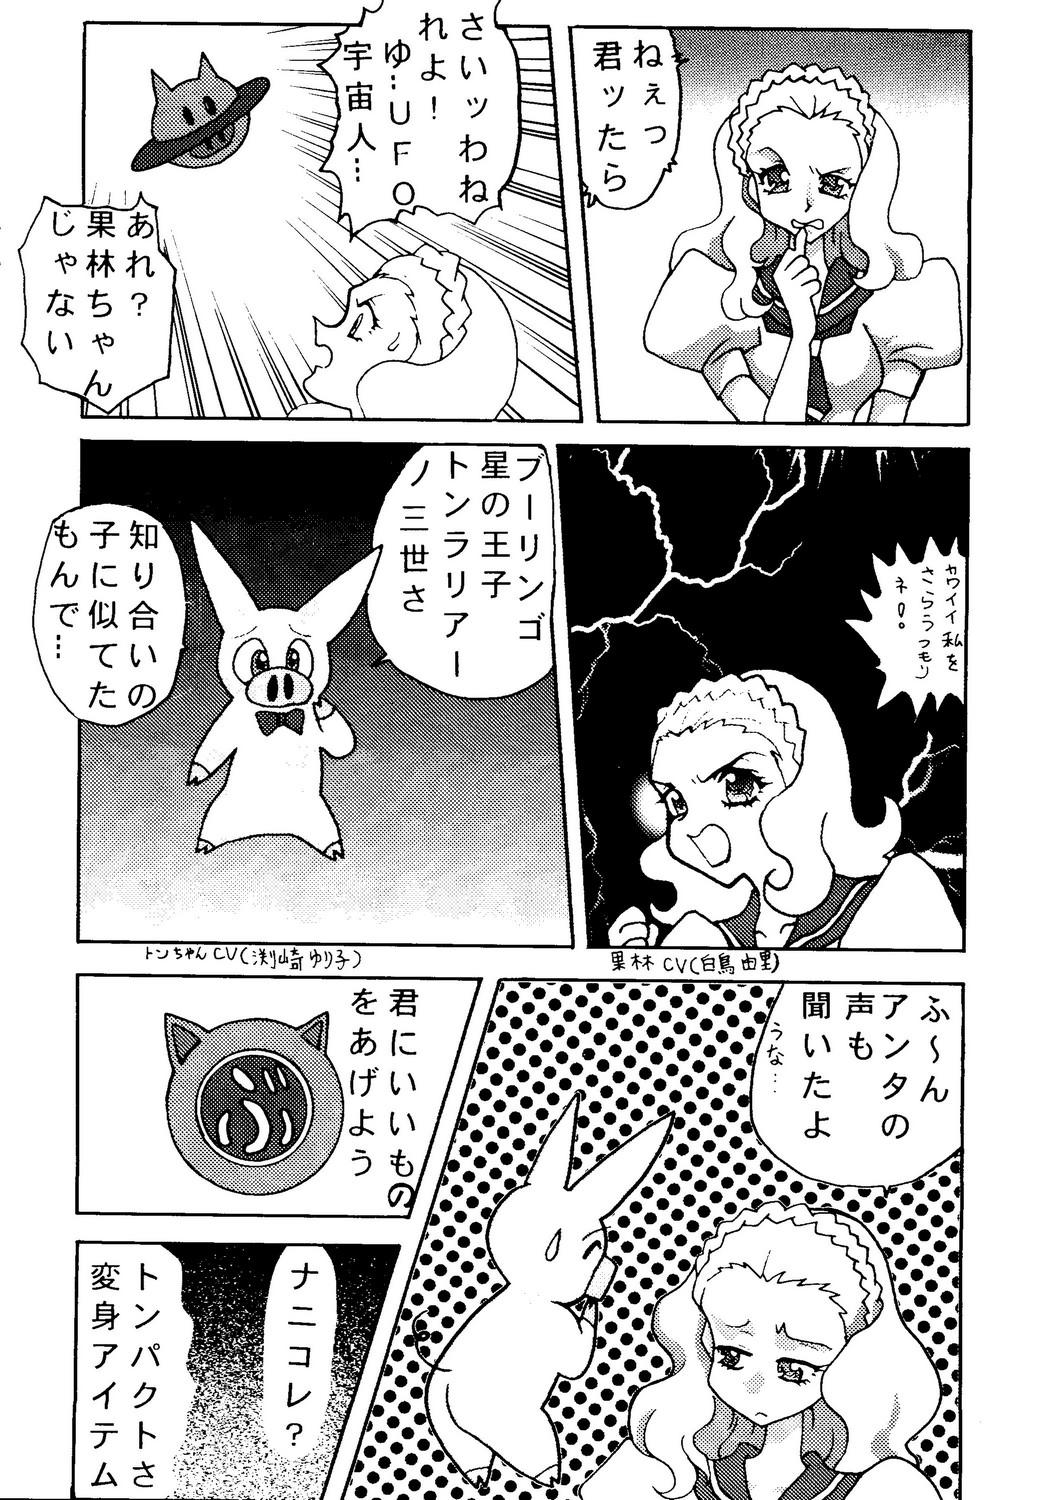 Bigtits VS-X - Pokemon Gaogaigar Revolutionary girl utena Tonde buurin Spank - Page 7